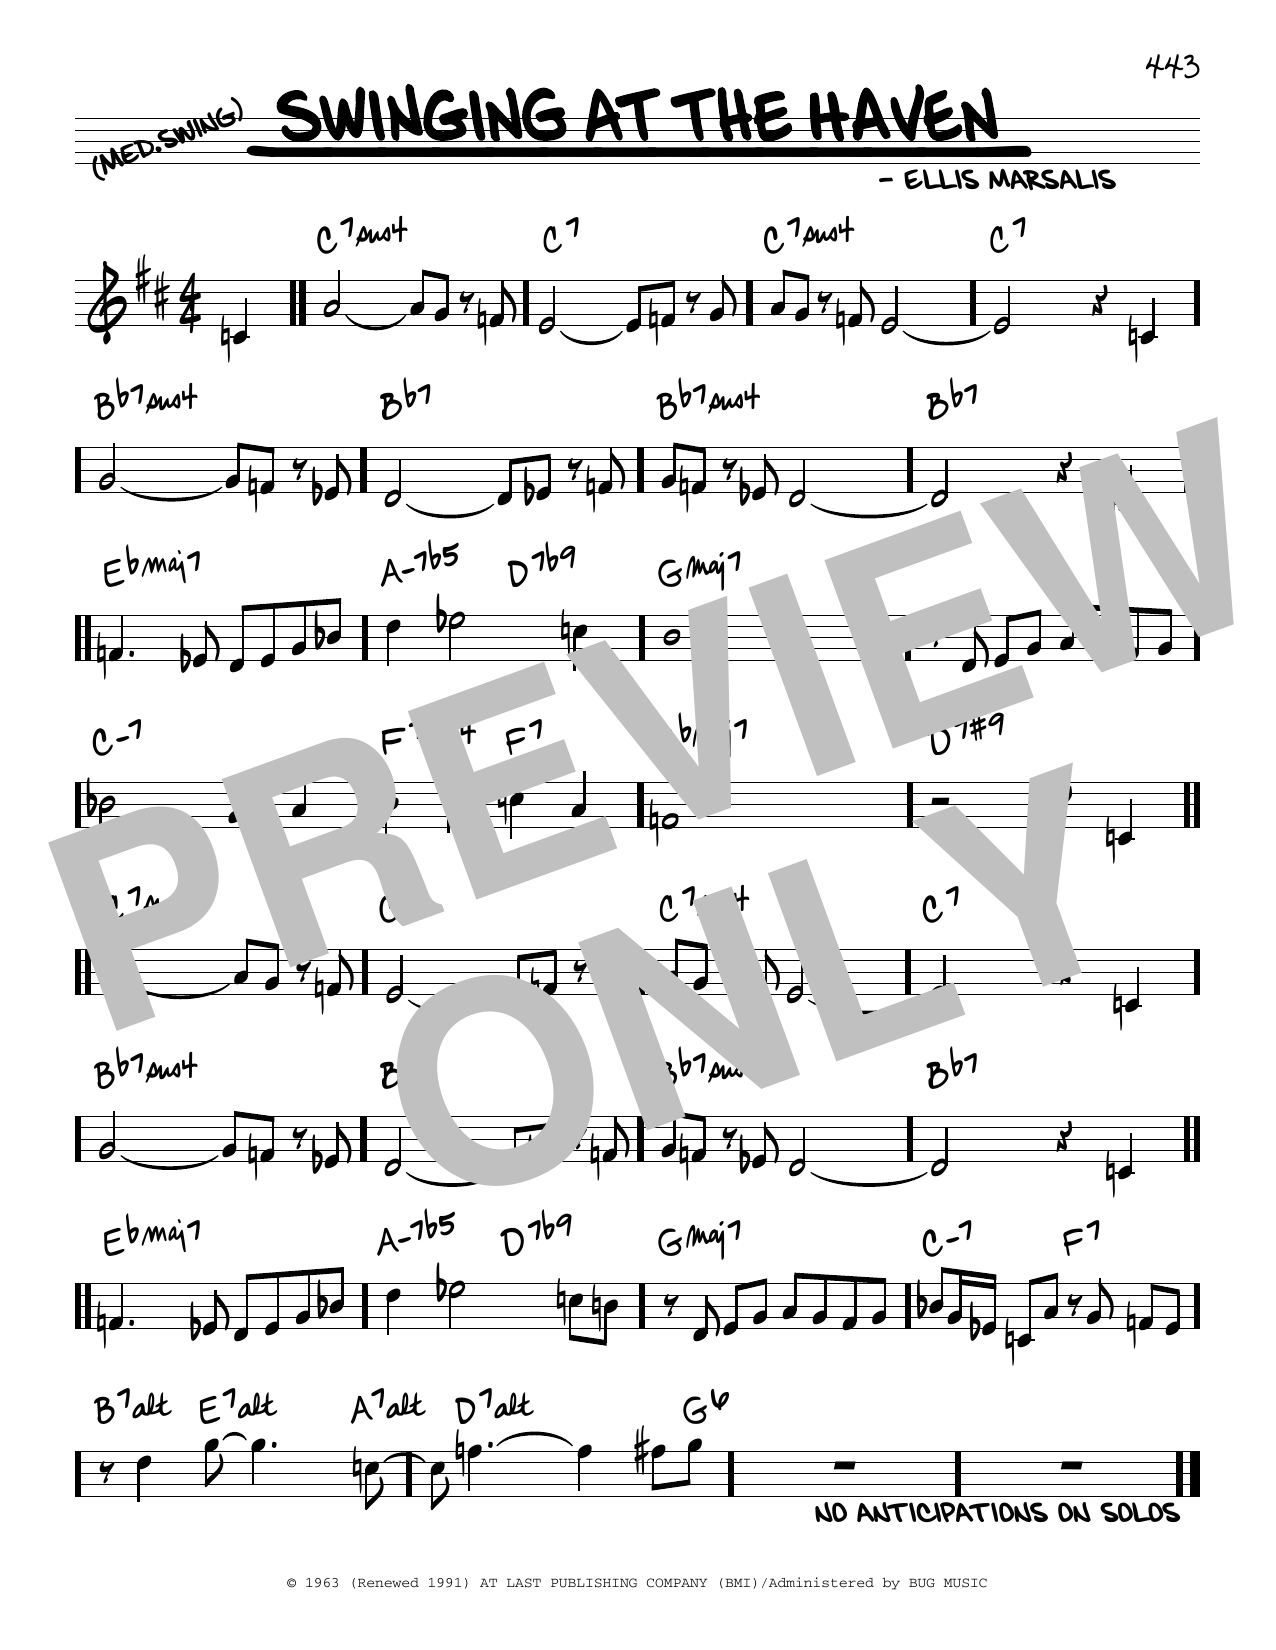 Ellis Marsalis Jr. Swinging At The Haven Sheet Music Notes & Chords for Real Book – Melody & Chords - Download or Print PDF